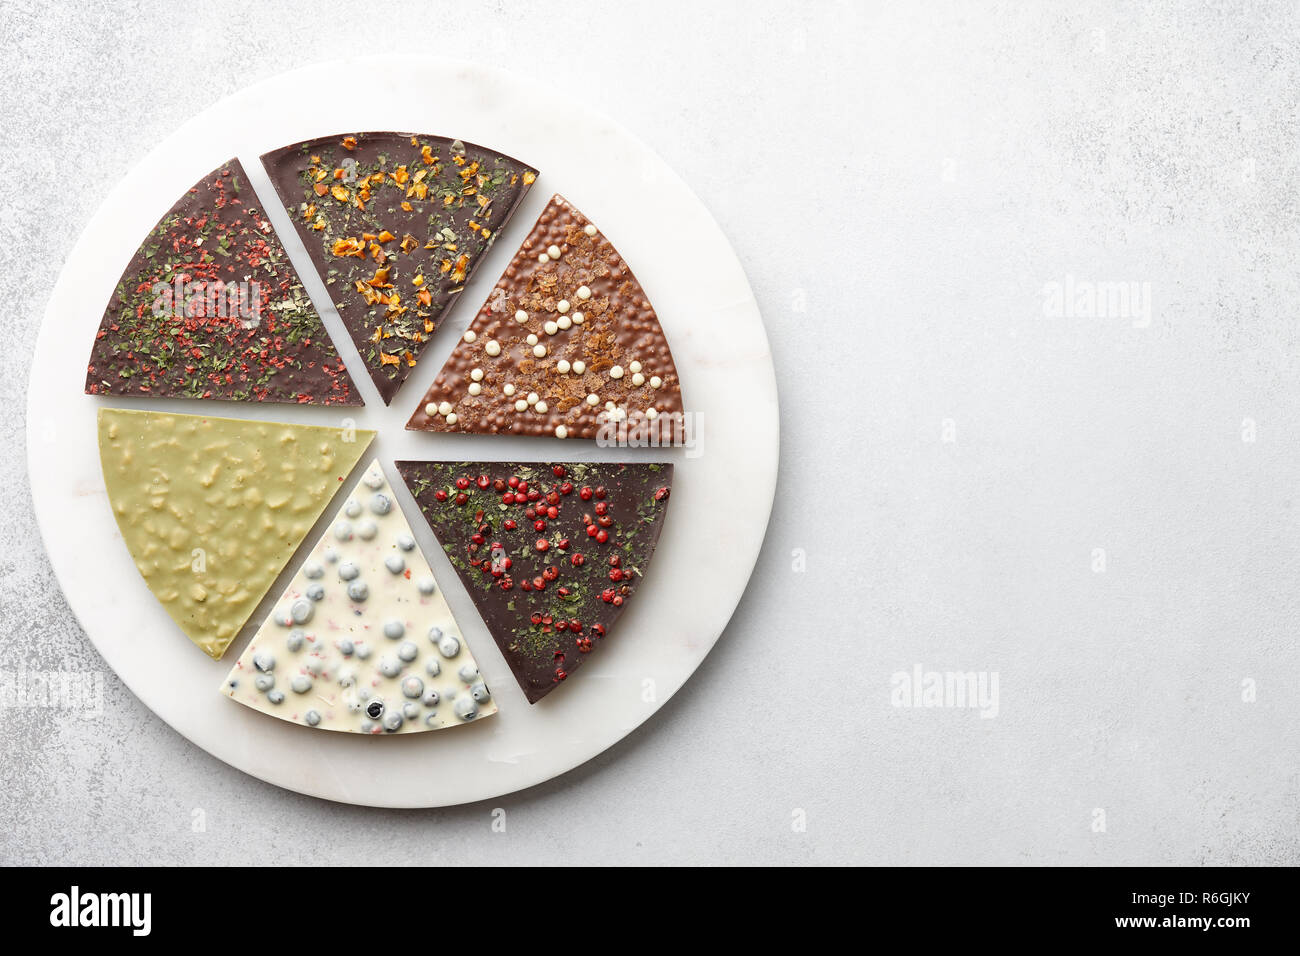 Round chocolate pizza pieces on white textured background Stock Photo